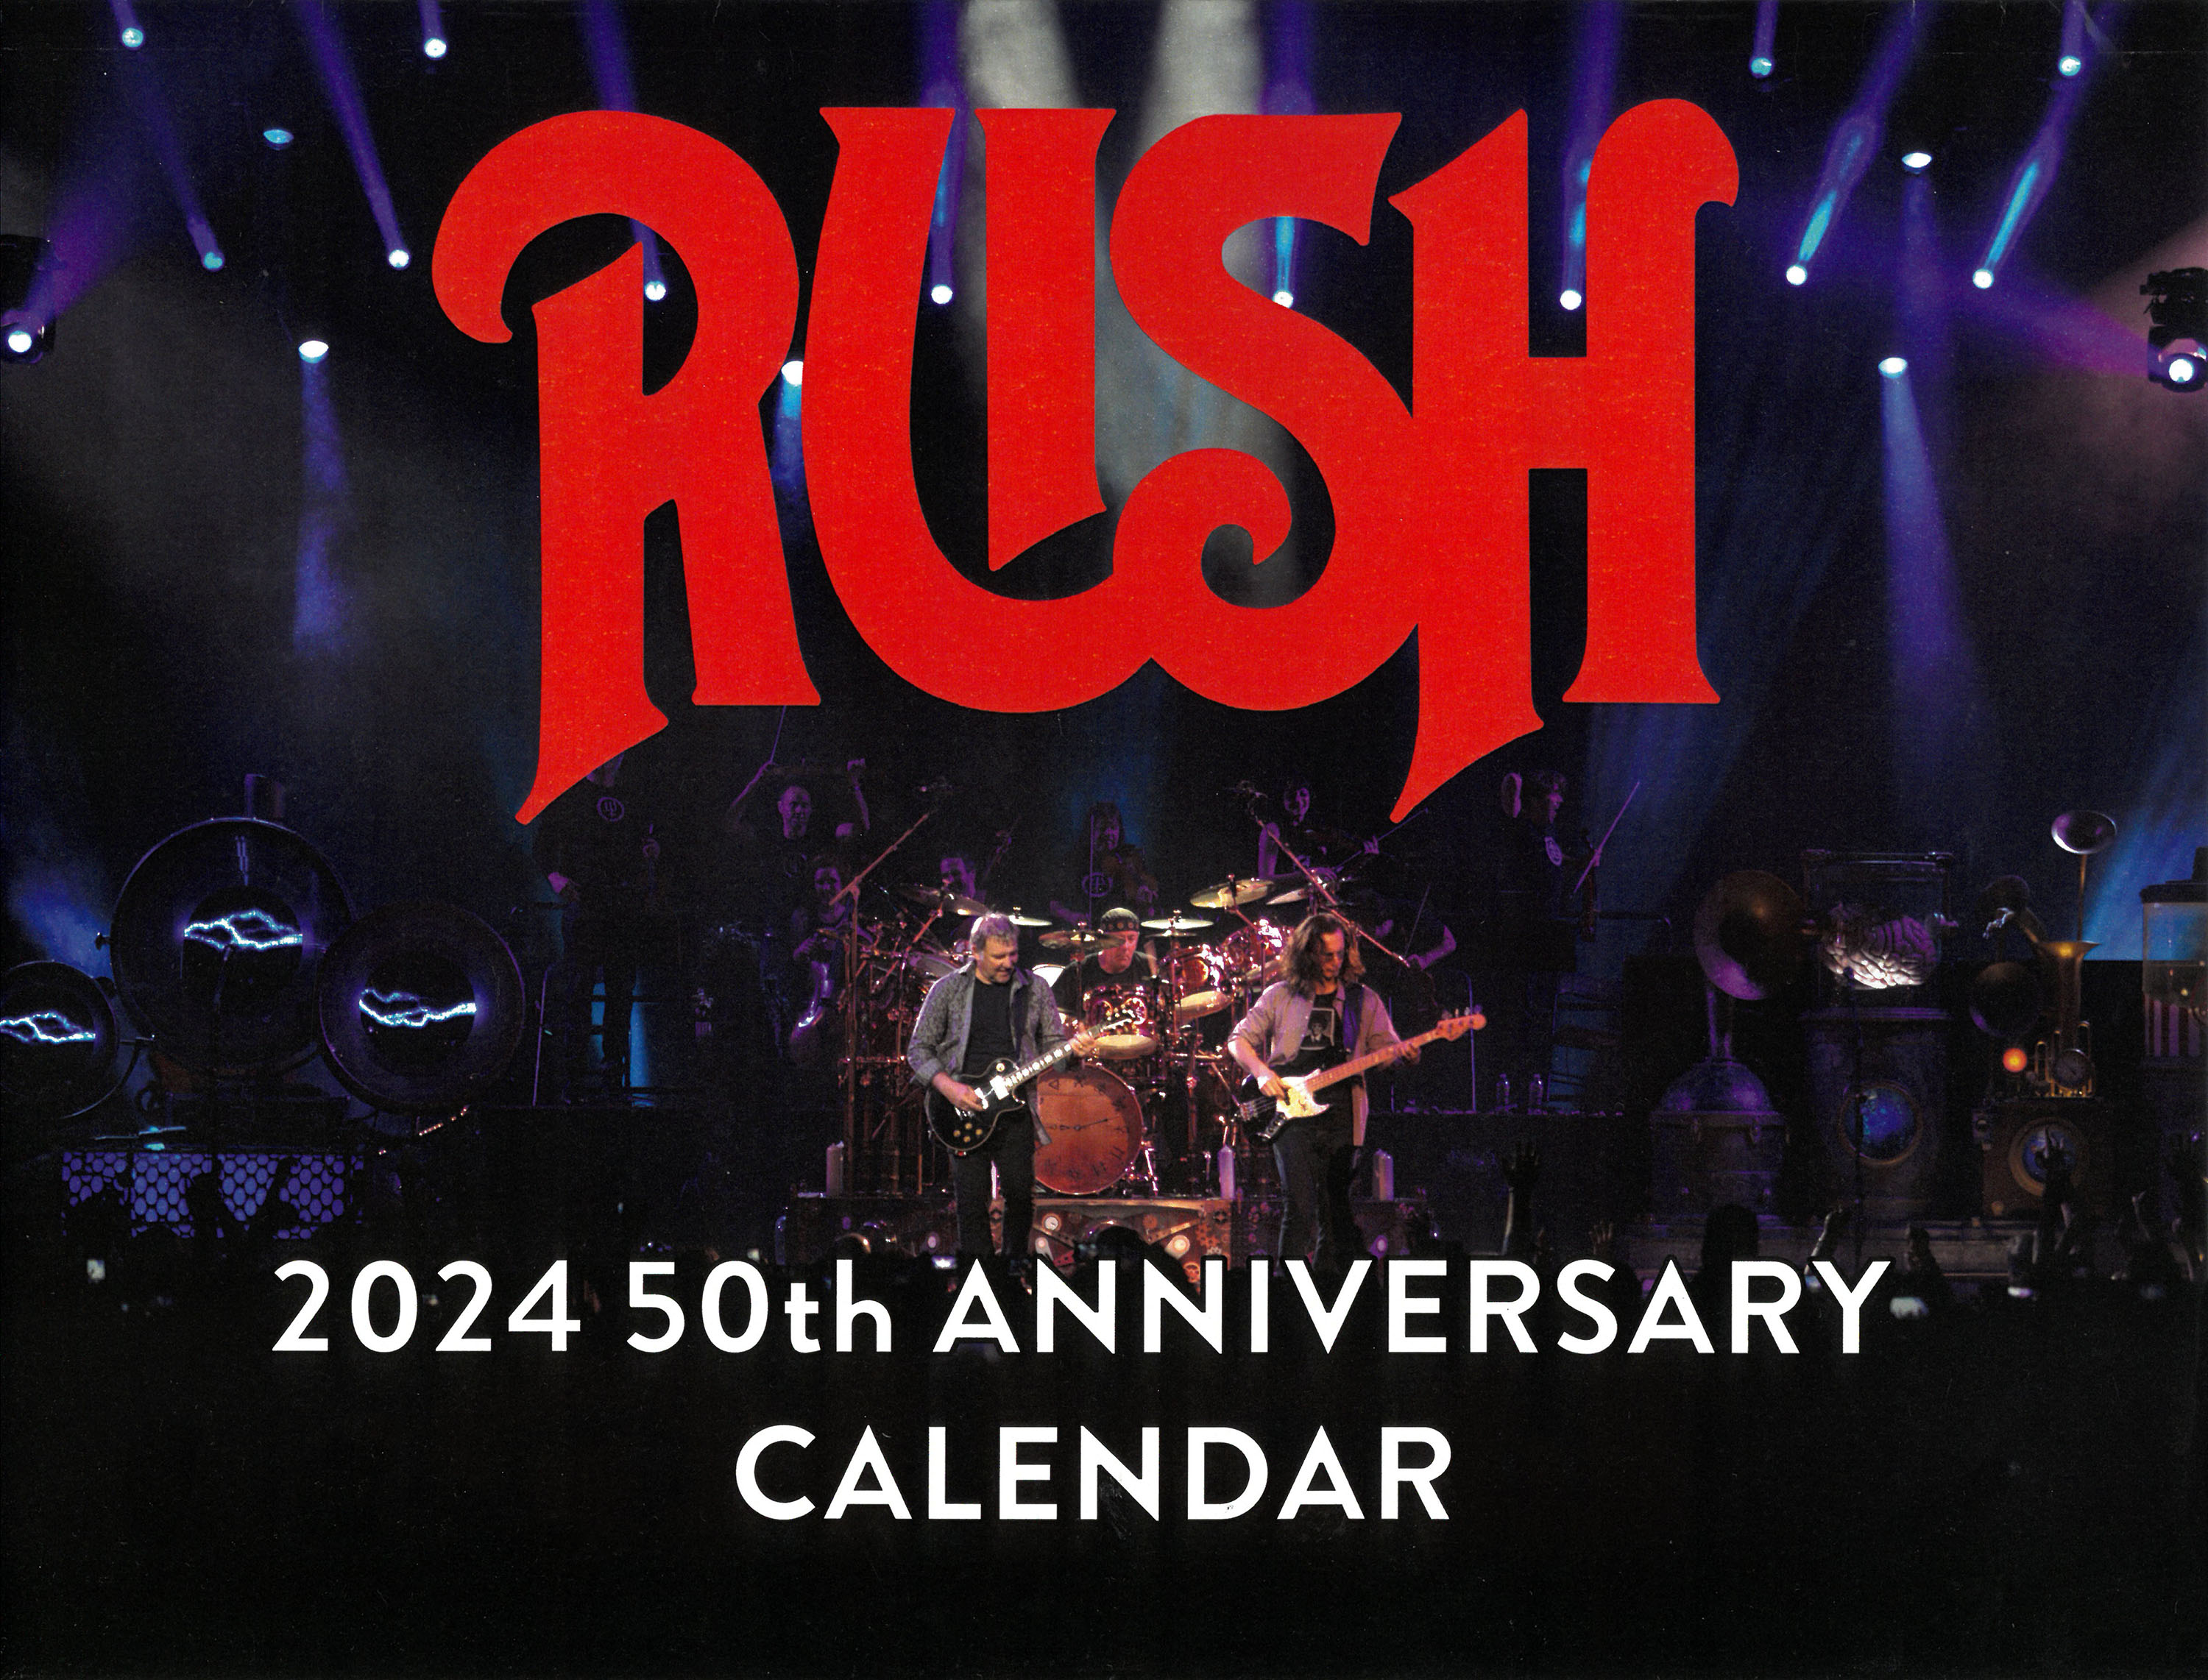 Rush 2024 50th Anniversary Calendar